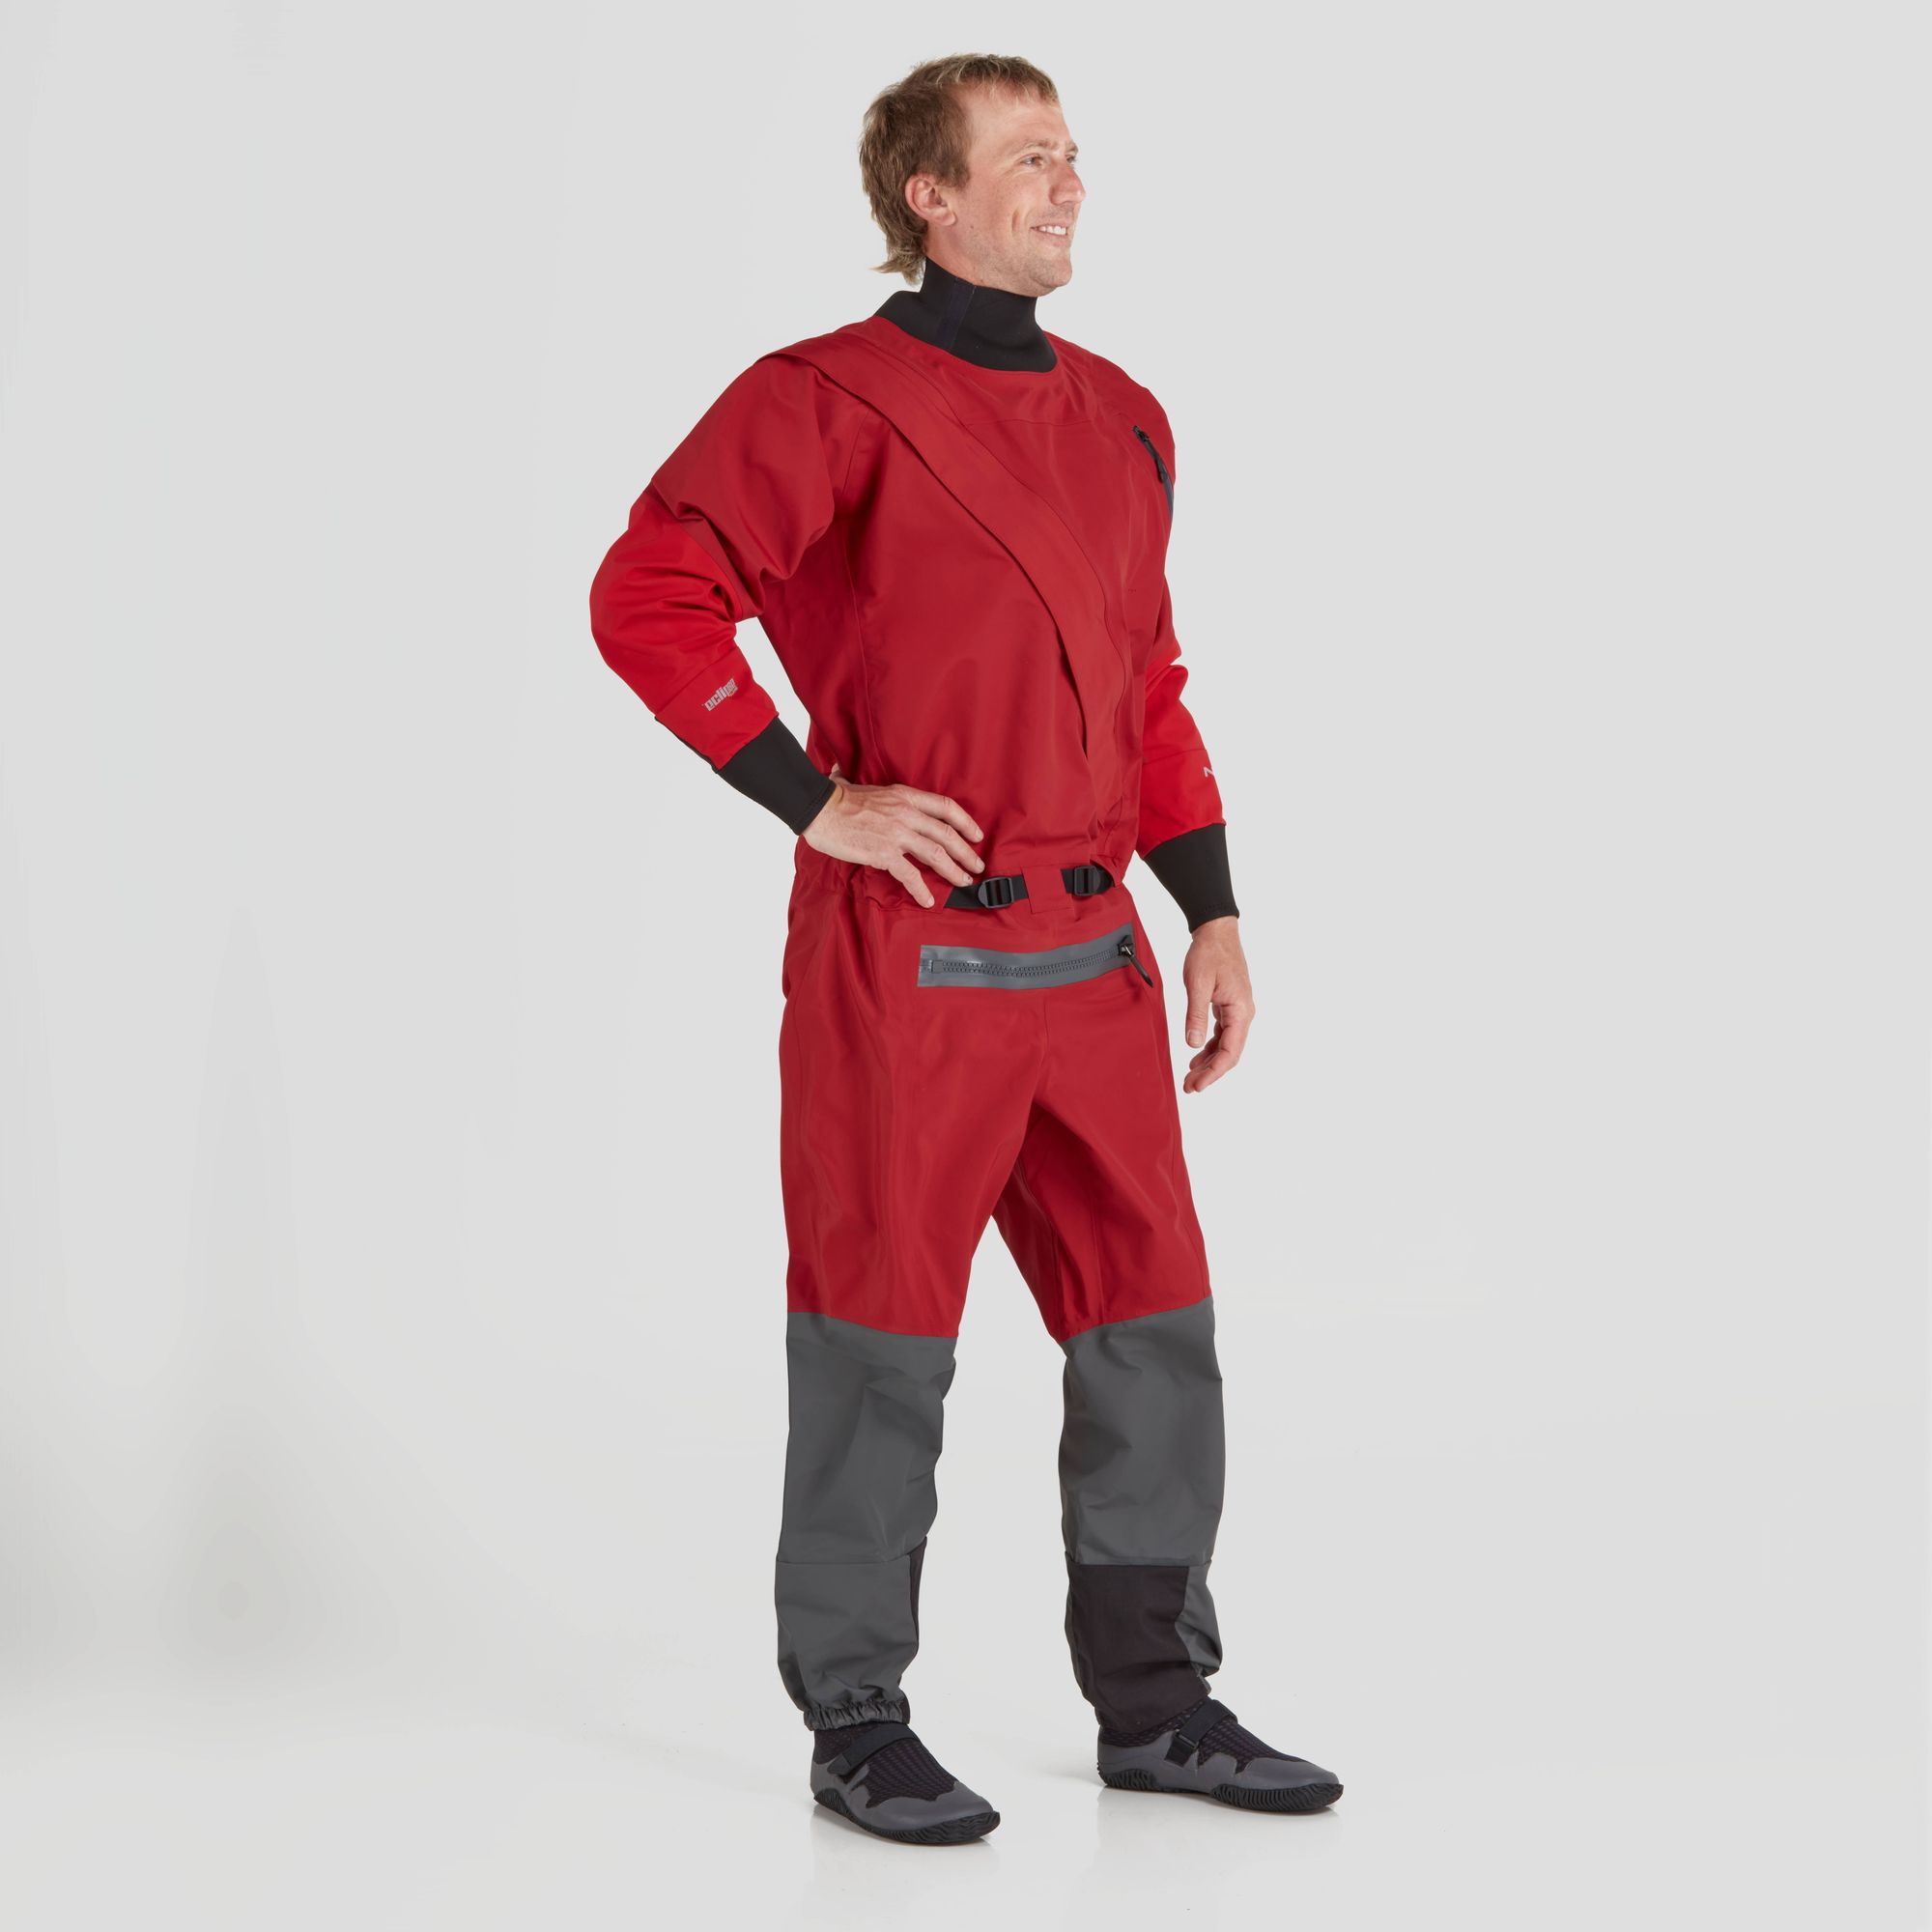 NRS Men's Explorer Semi-Dry Suit Herren Trockenanzug